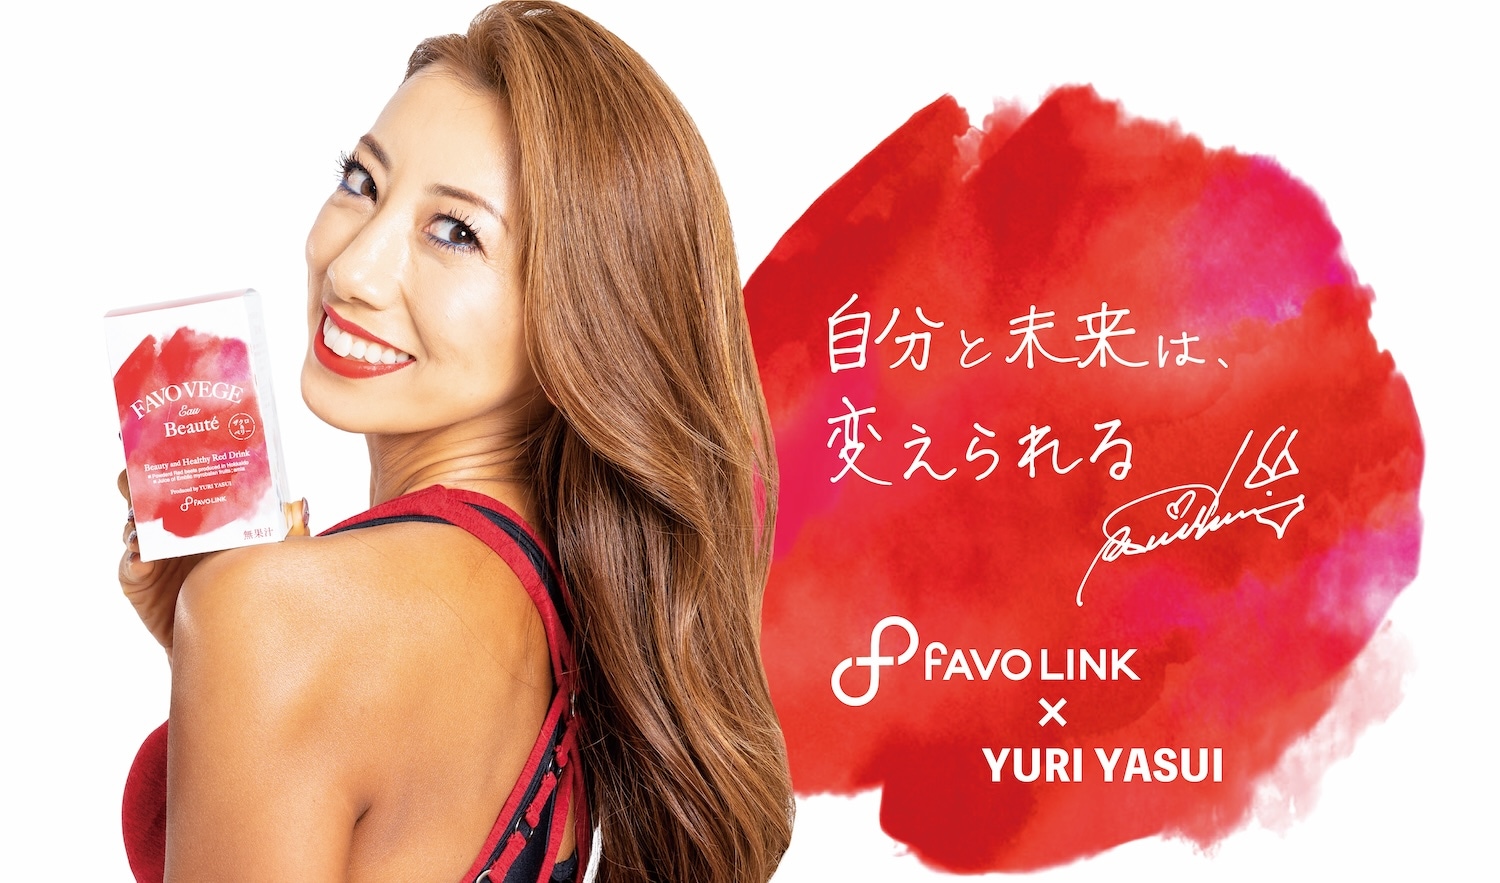 FAVOLINK produced by YURI YASUI | |